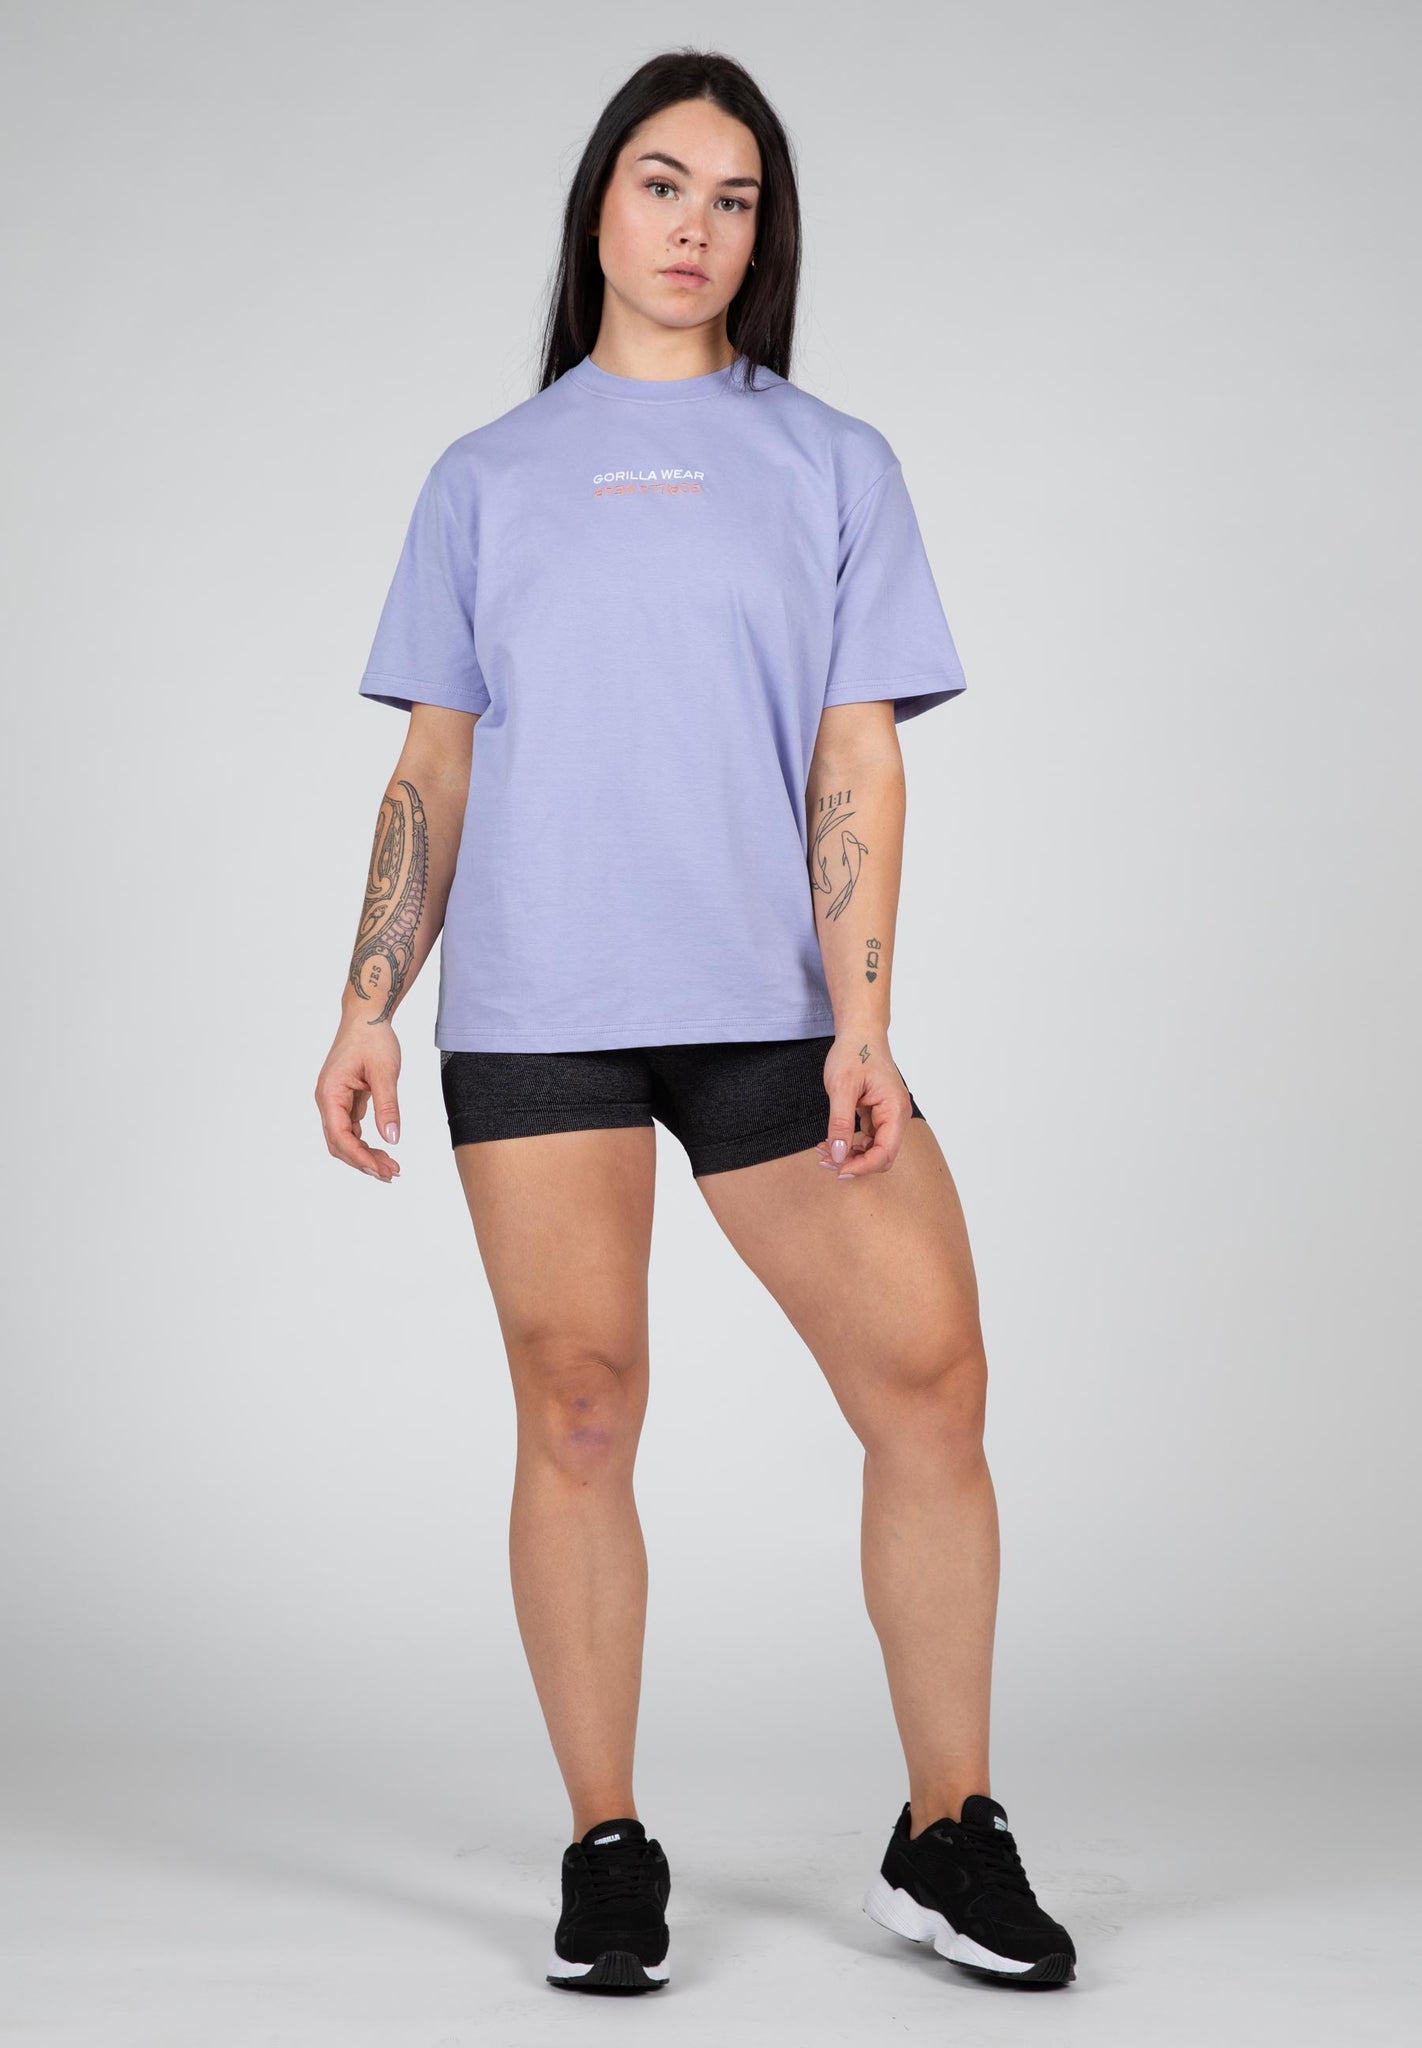 Selah Seamless Long Sleeve - Lilac - XS/S Gorilla Wear